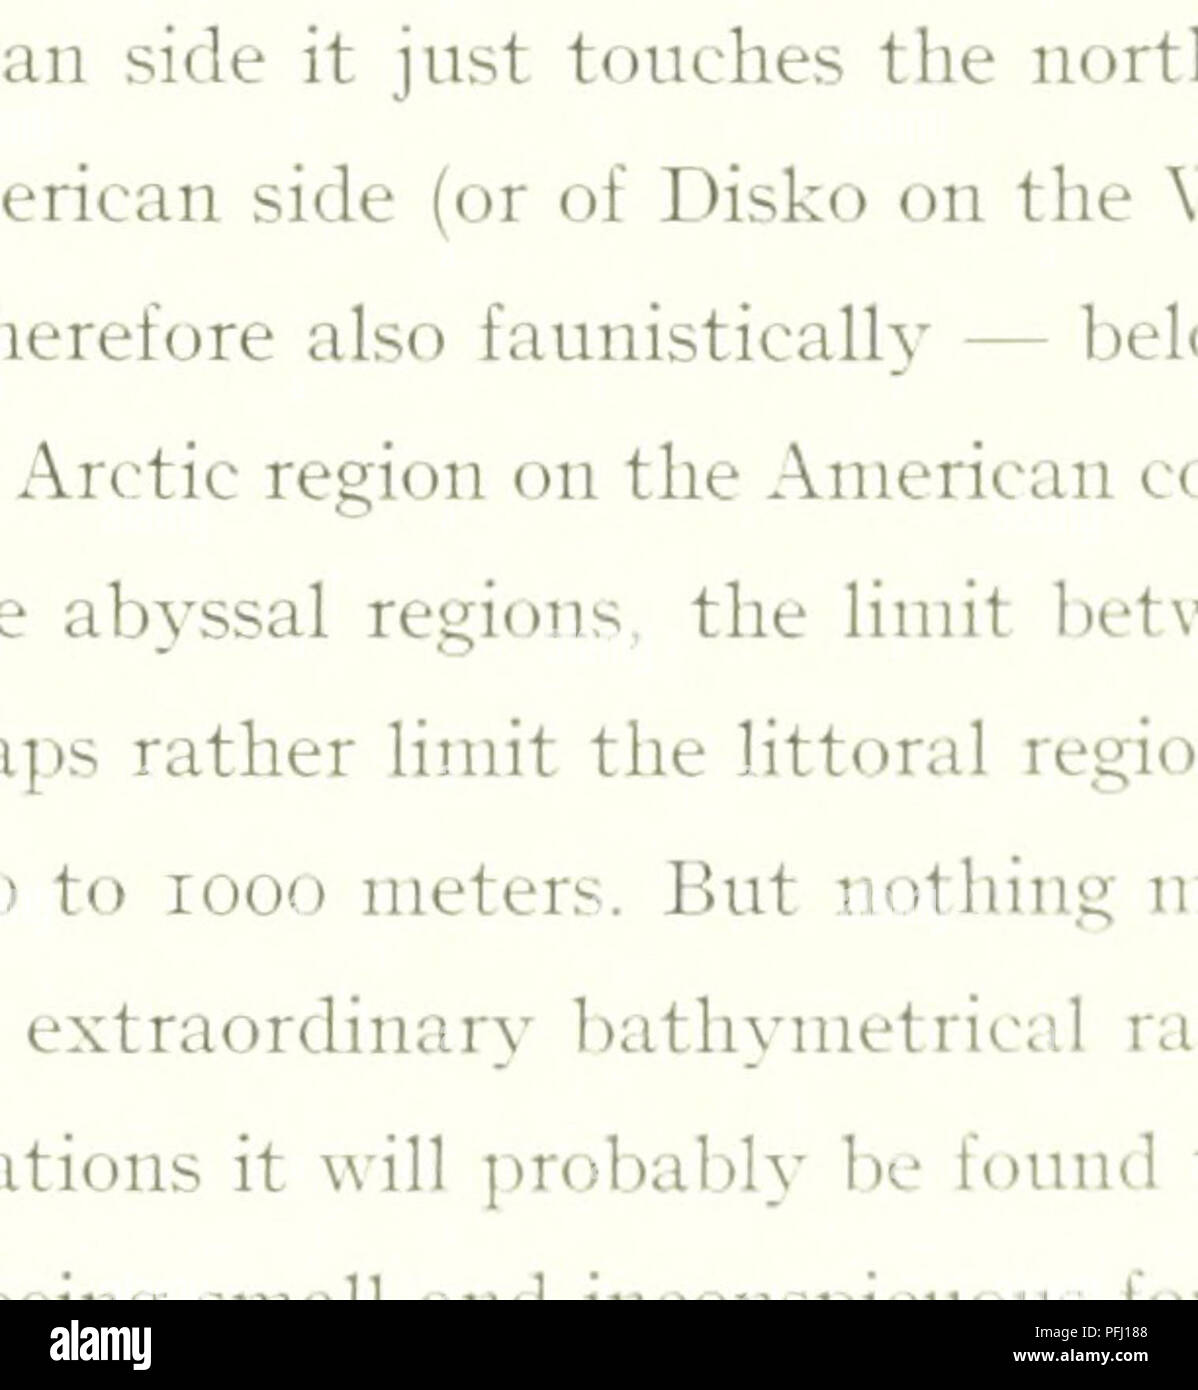 . The Danish Ingolf-expedition. Marine animals -- Arctic regions; Scientific expeditions; Arctic regions. COIMU'ODA 31 1900. Calamis liypcrborcus Kroycr, C,. () Sars, p. 2. 1901. 1902. 1902. 1903- I903- 1903. 1904. 1905. — 'J'li. and A. Scott, pp. 1905. 33S-339- 1907- — Th. Scott, p. 450. — Mrazek, pp. 506—507. 1908. — Jensen, Joliansen, I,e- igoS. vin.sen, p. 303. — G. O. Sars, pp. 12 — 13, I 1911- pi. V. I 1913. — Norman, p. 133. '913- — Wolfenden, pp. 112. | Cal.inns liyper1)oreus Krover, Th. Scott, p. 221. — — — G. O. Sars, p. i. — — — Danias &amp; Koefoed, pp. 352 3.SS, 405- — — — I'arran Stock Photo